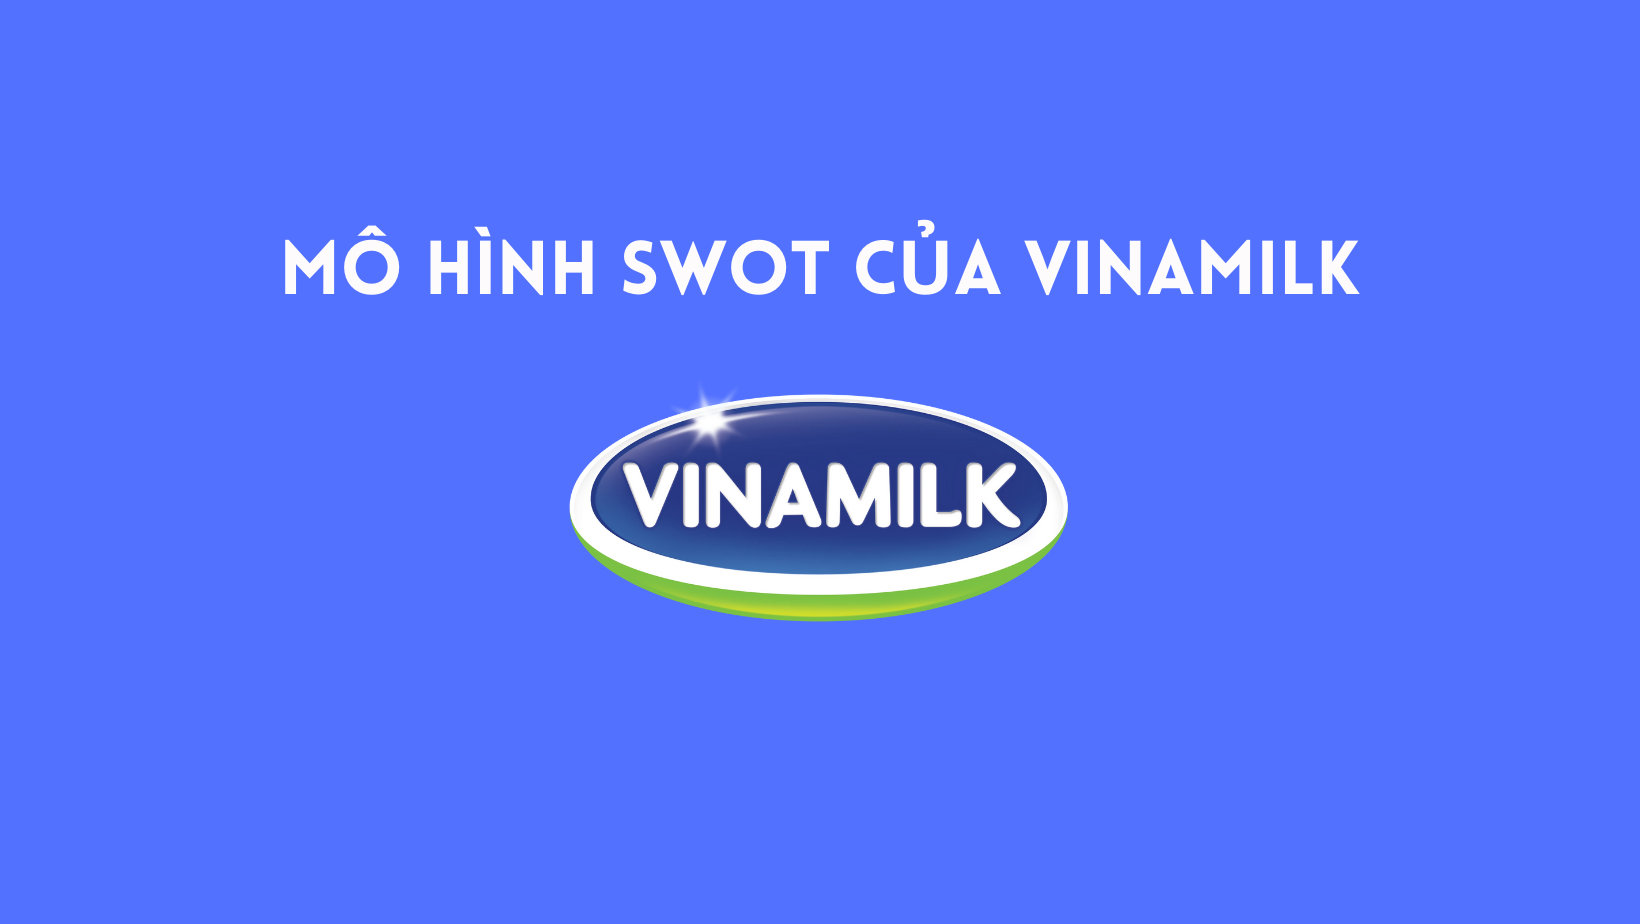 Phát triển bền vững  Vinamilk Việt Nam  Vinamilk